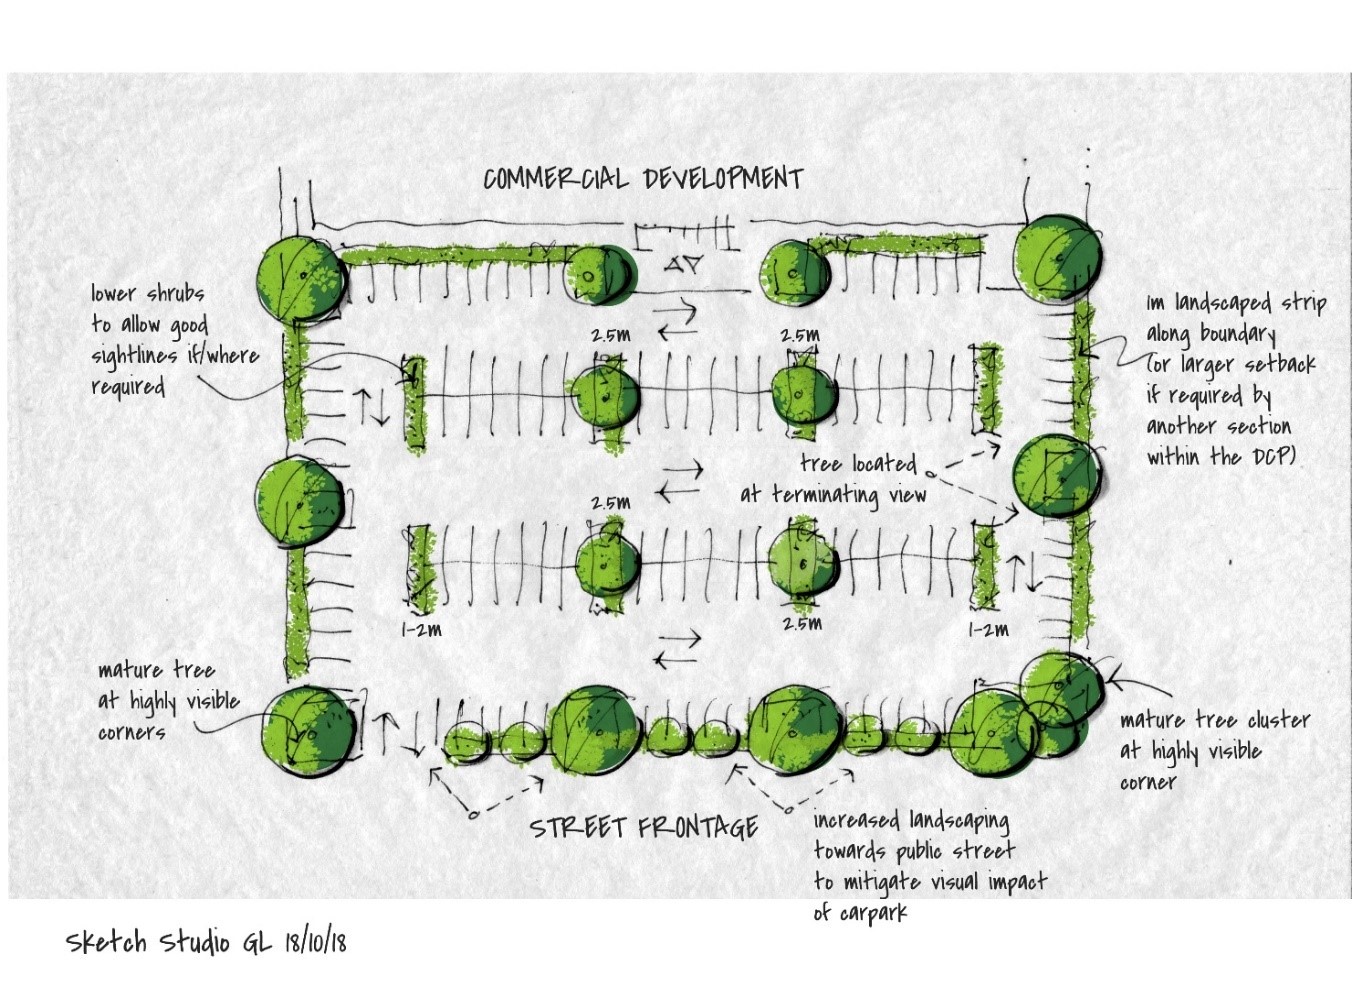 Figure 2-12 Design features of car park